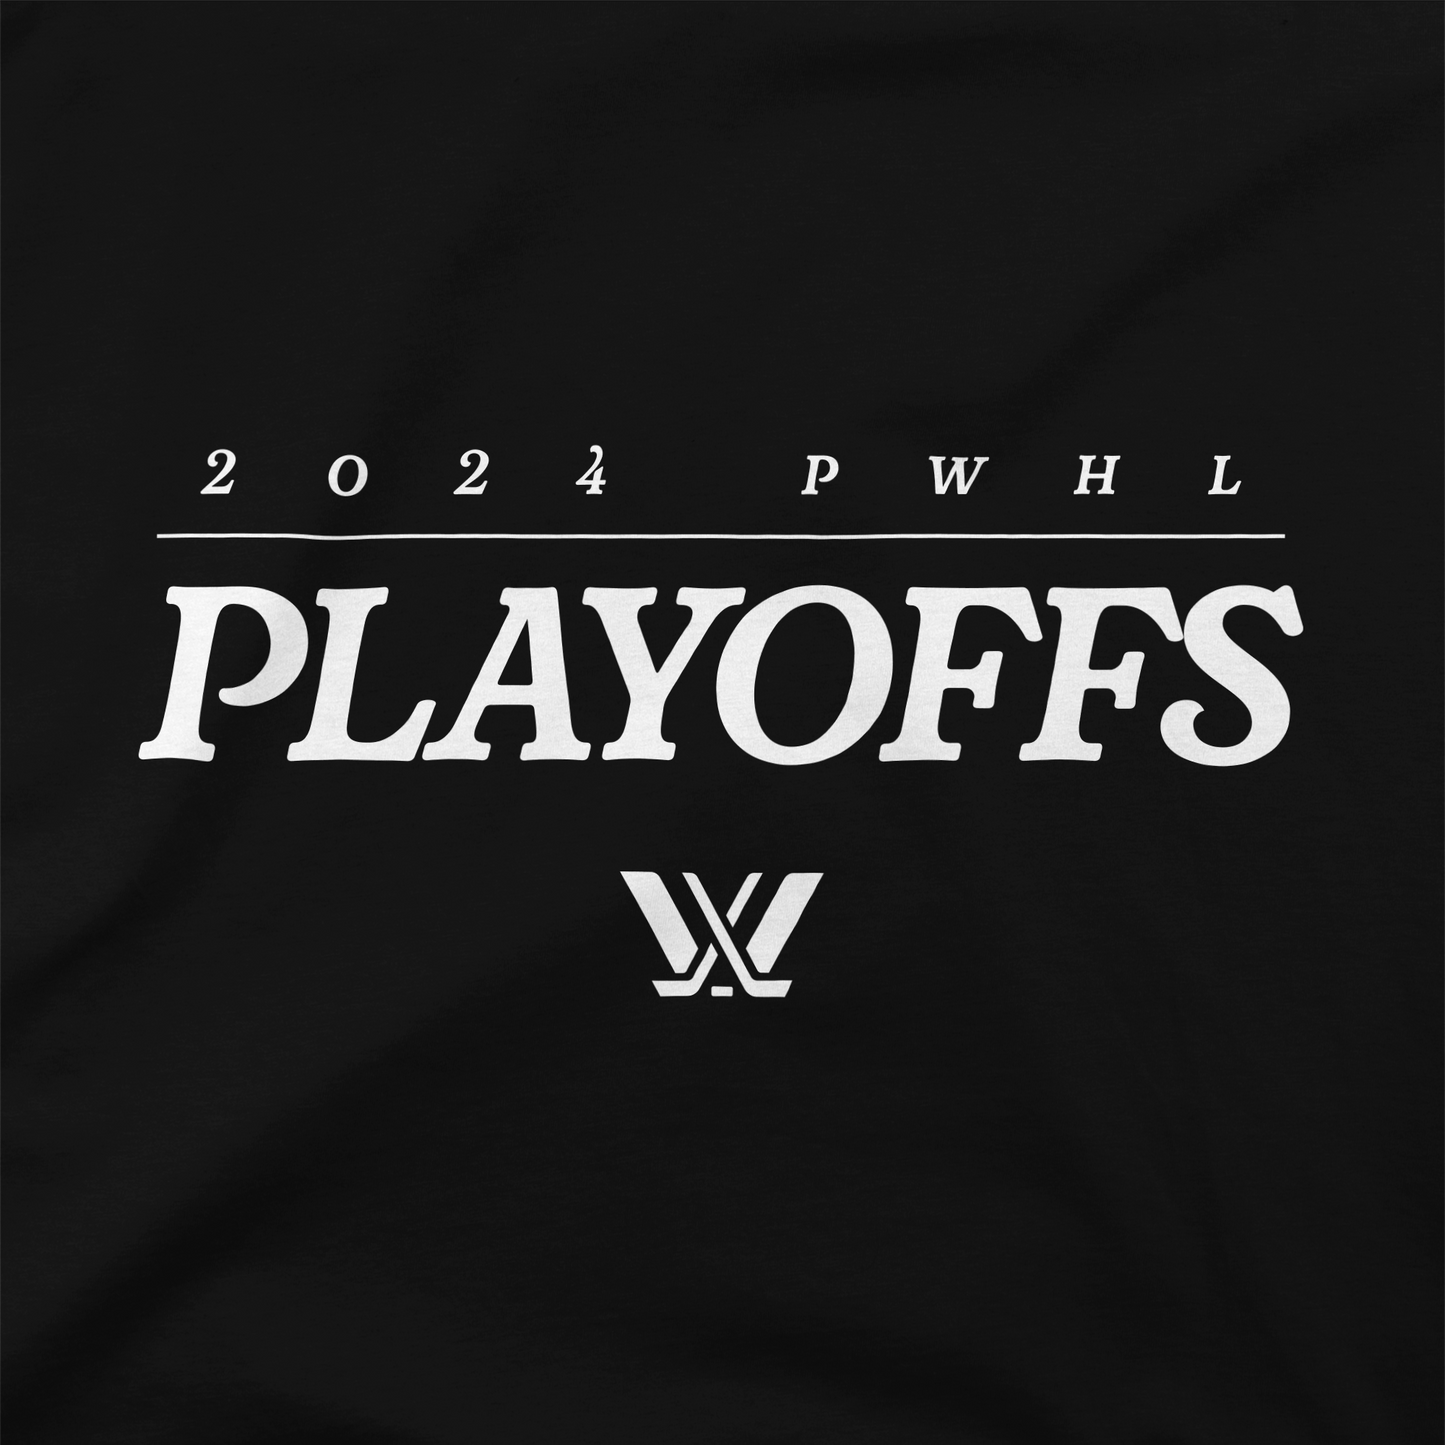 PWHL Playoffs Block Hoodie